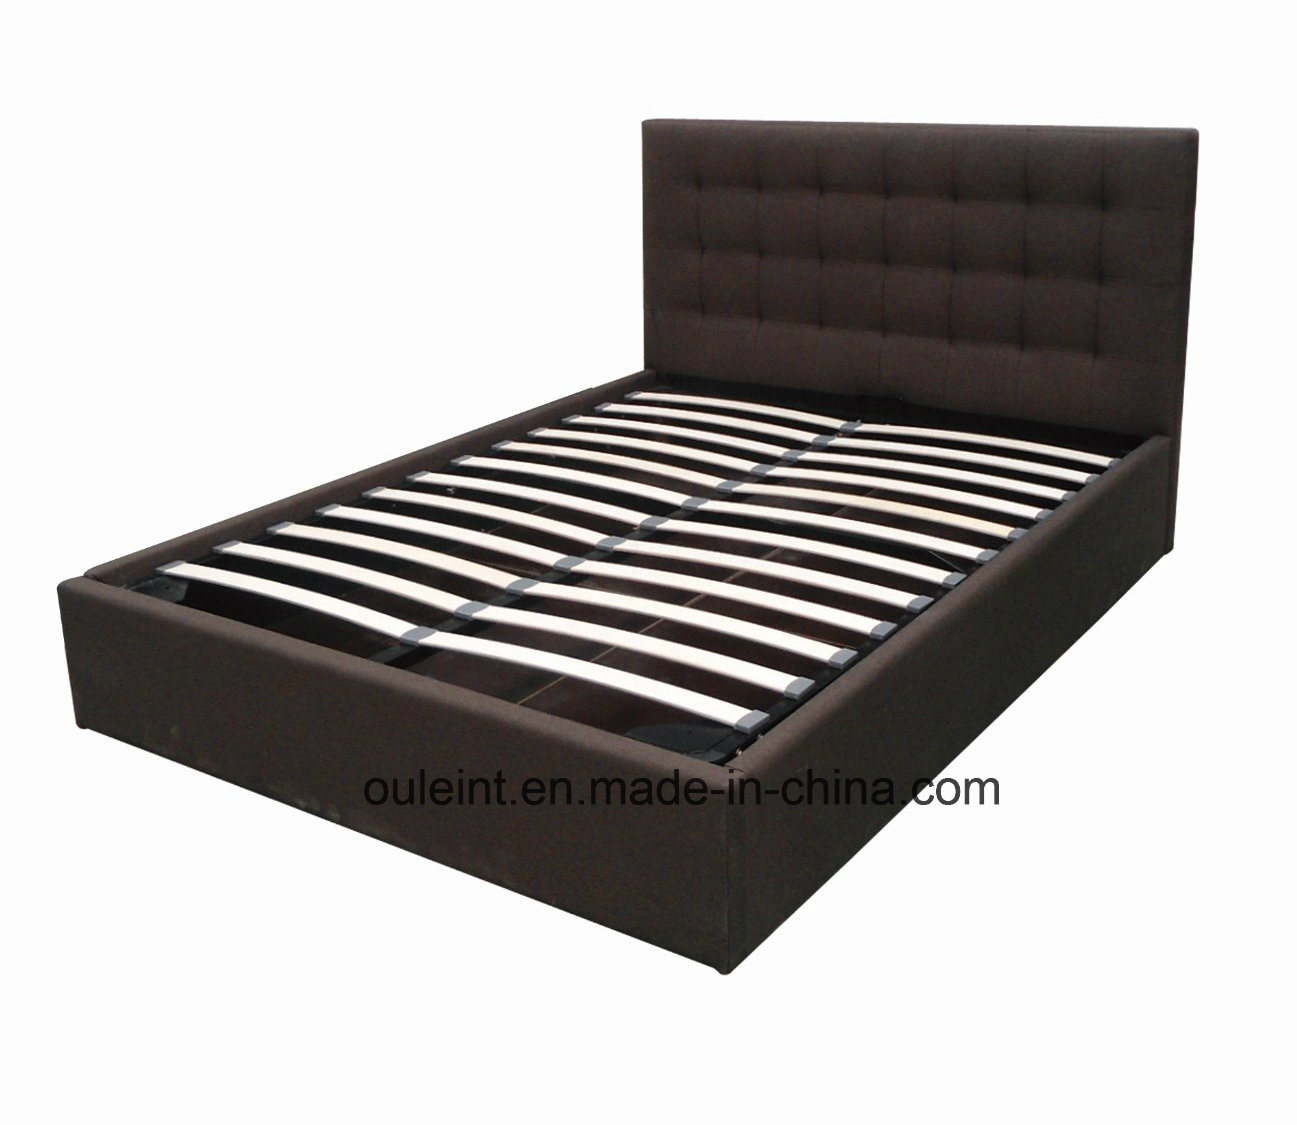 Fabric Storage Queen Bed (OL17165)